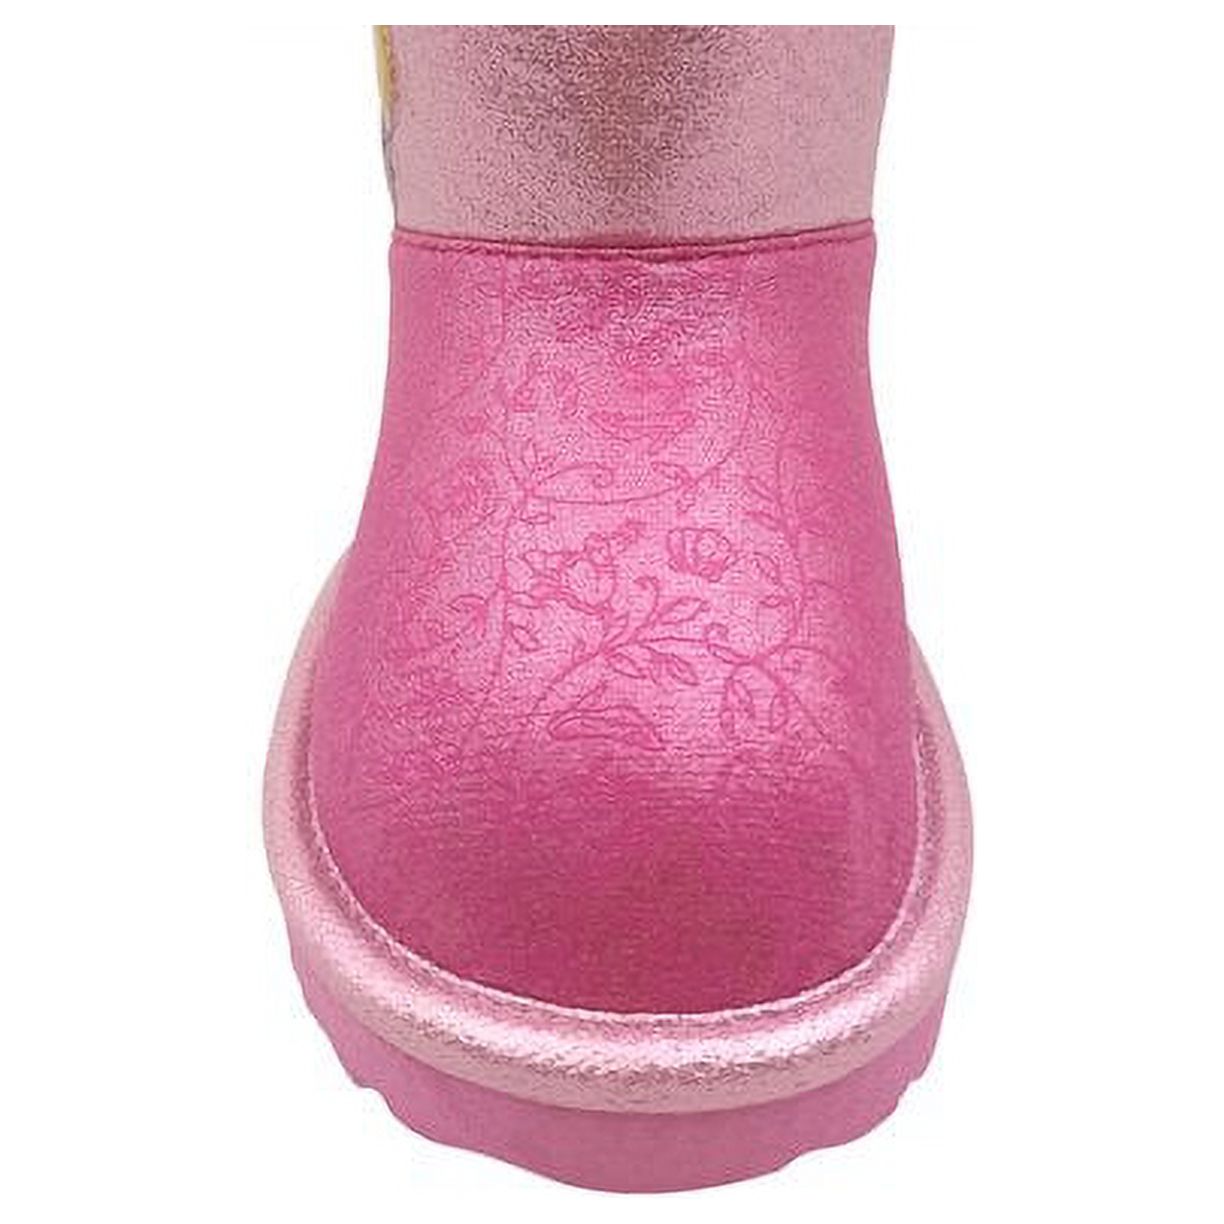 Disney Princess Cozy Faux Shearling Winter Boot (Toddler Girls) - image 3 of 5